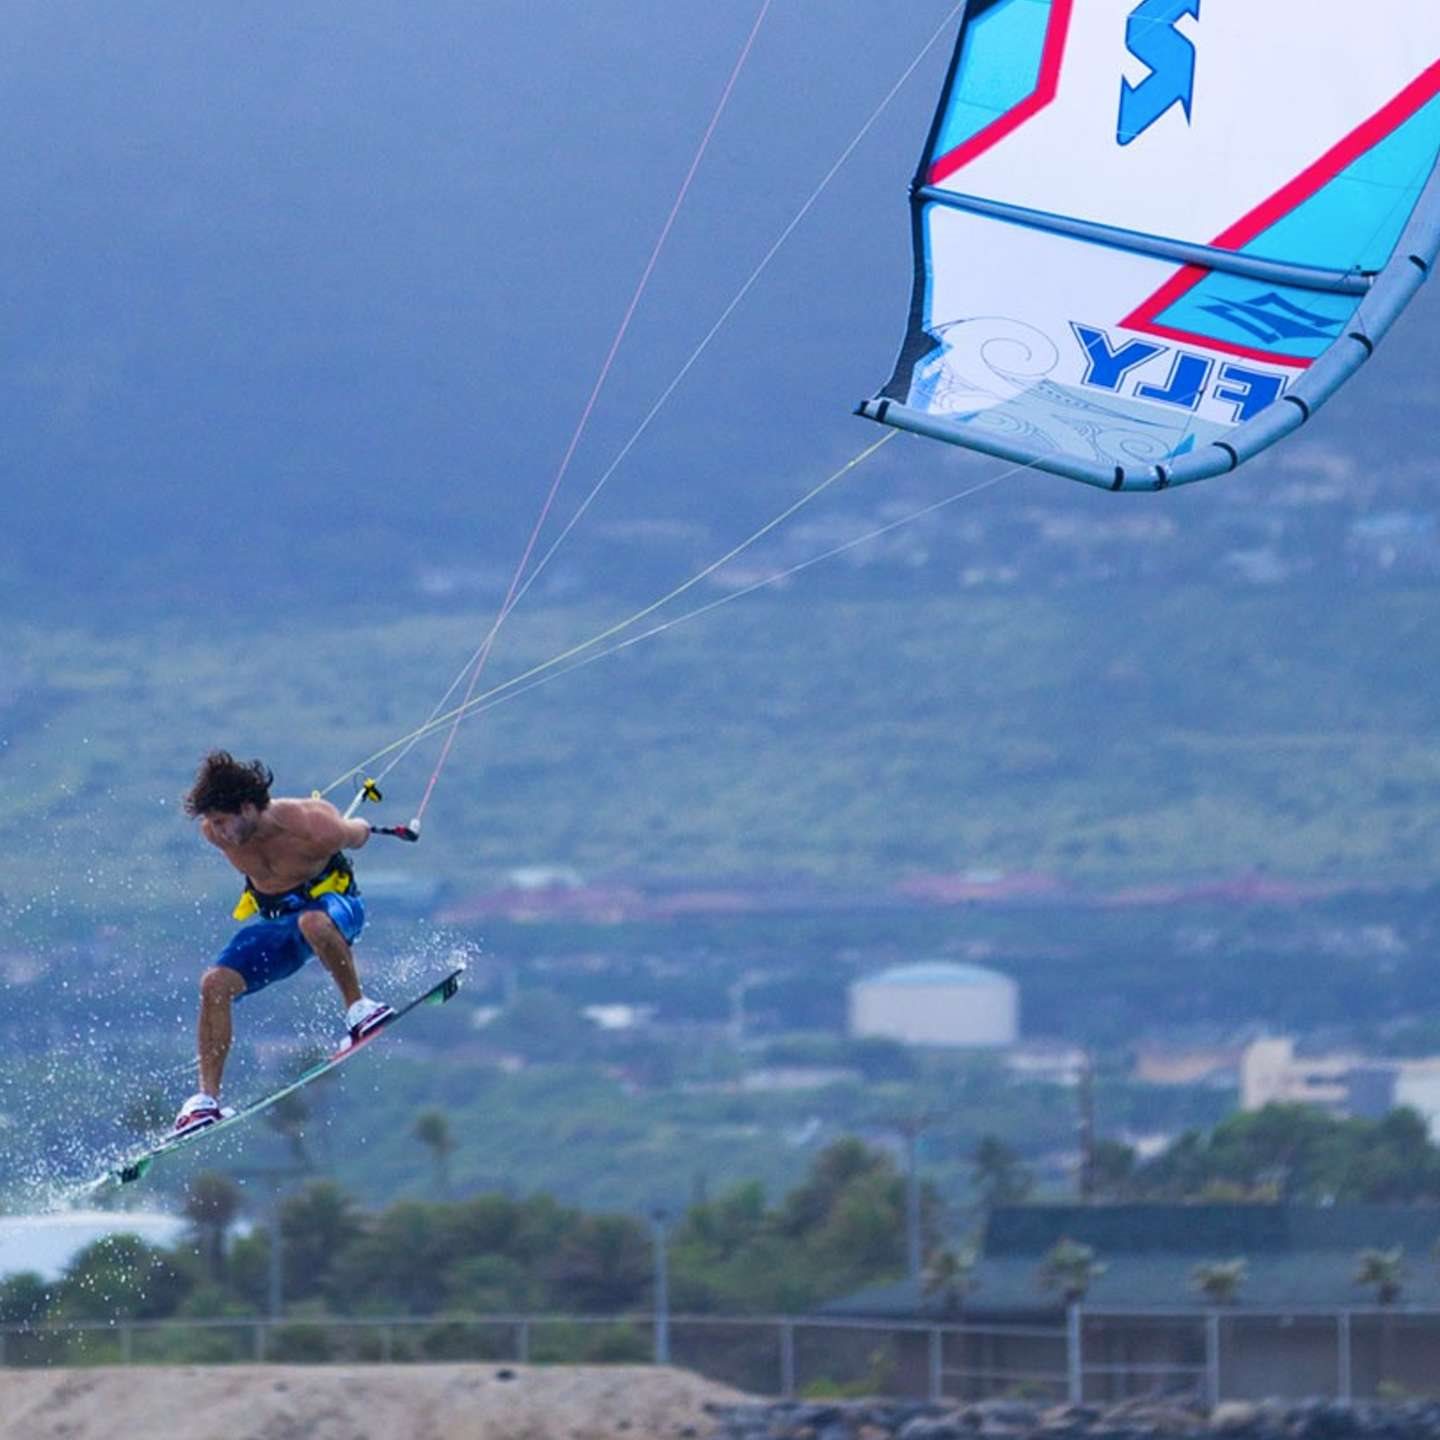 Naish Fly 2017 kite